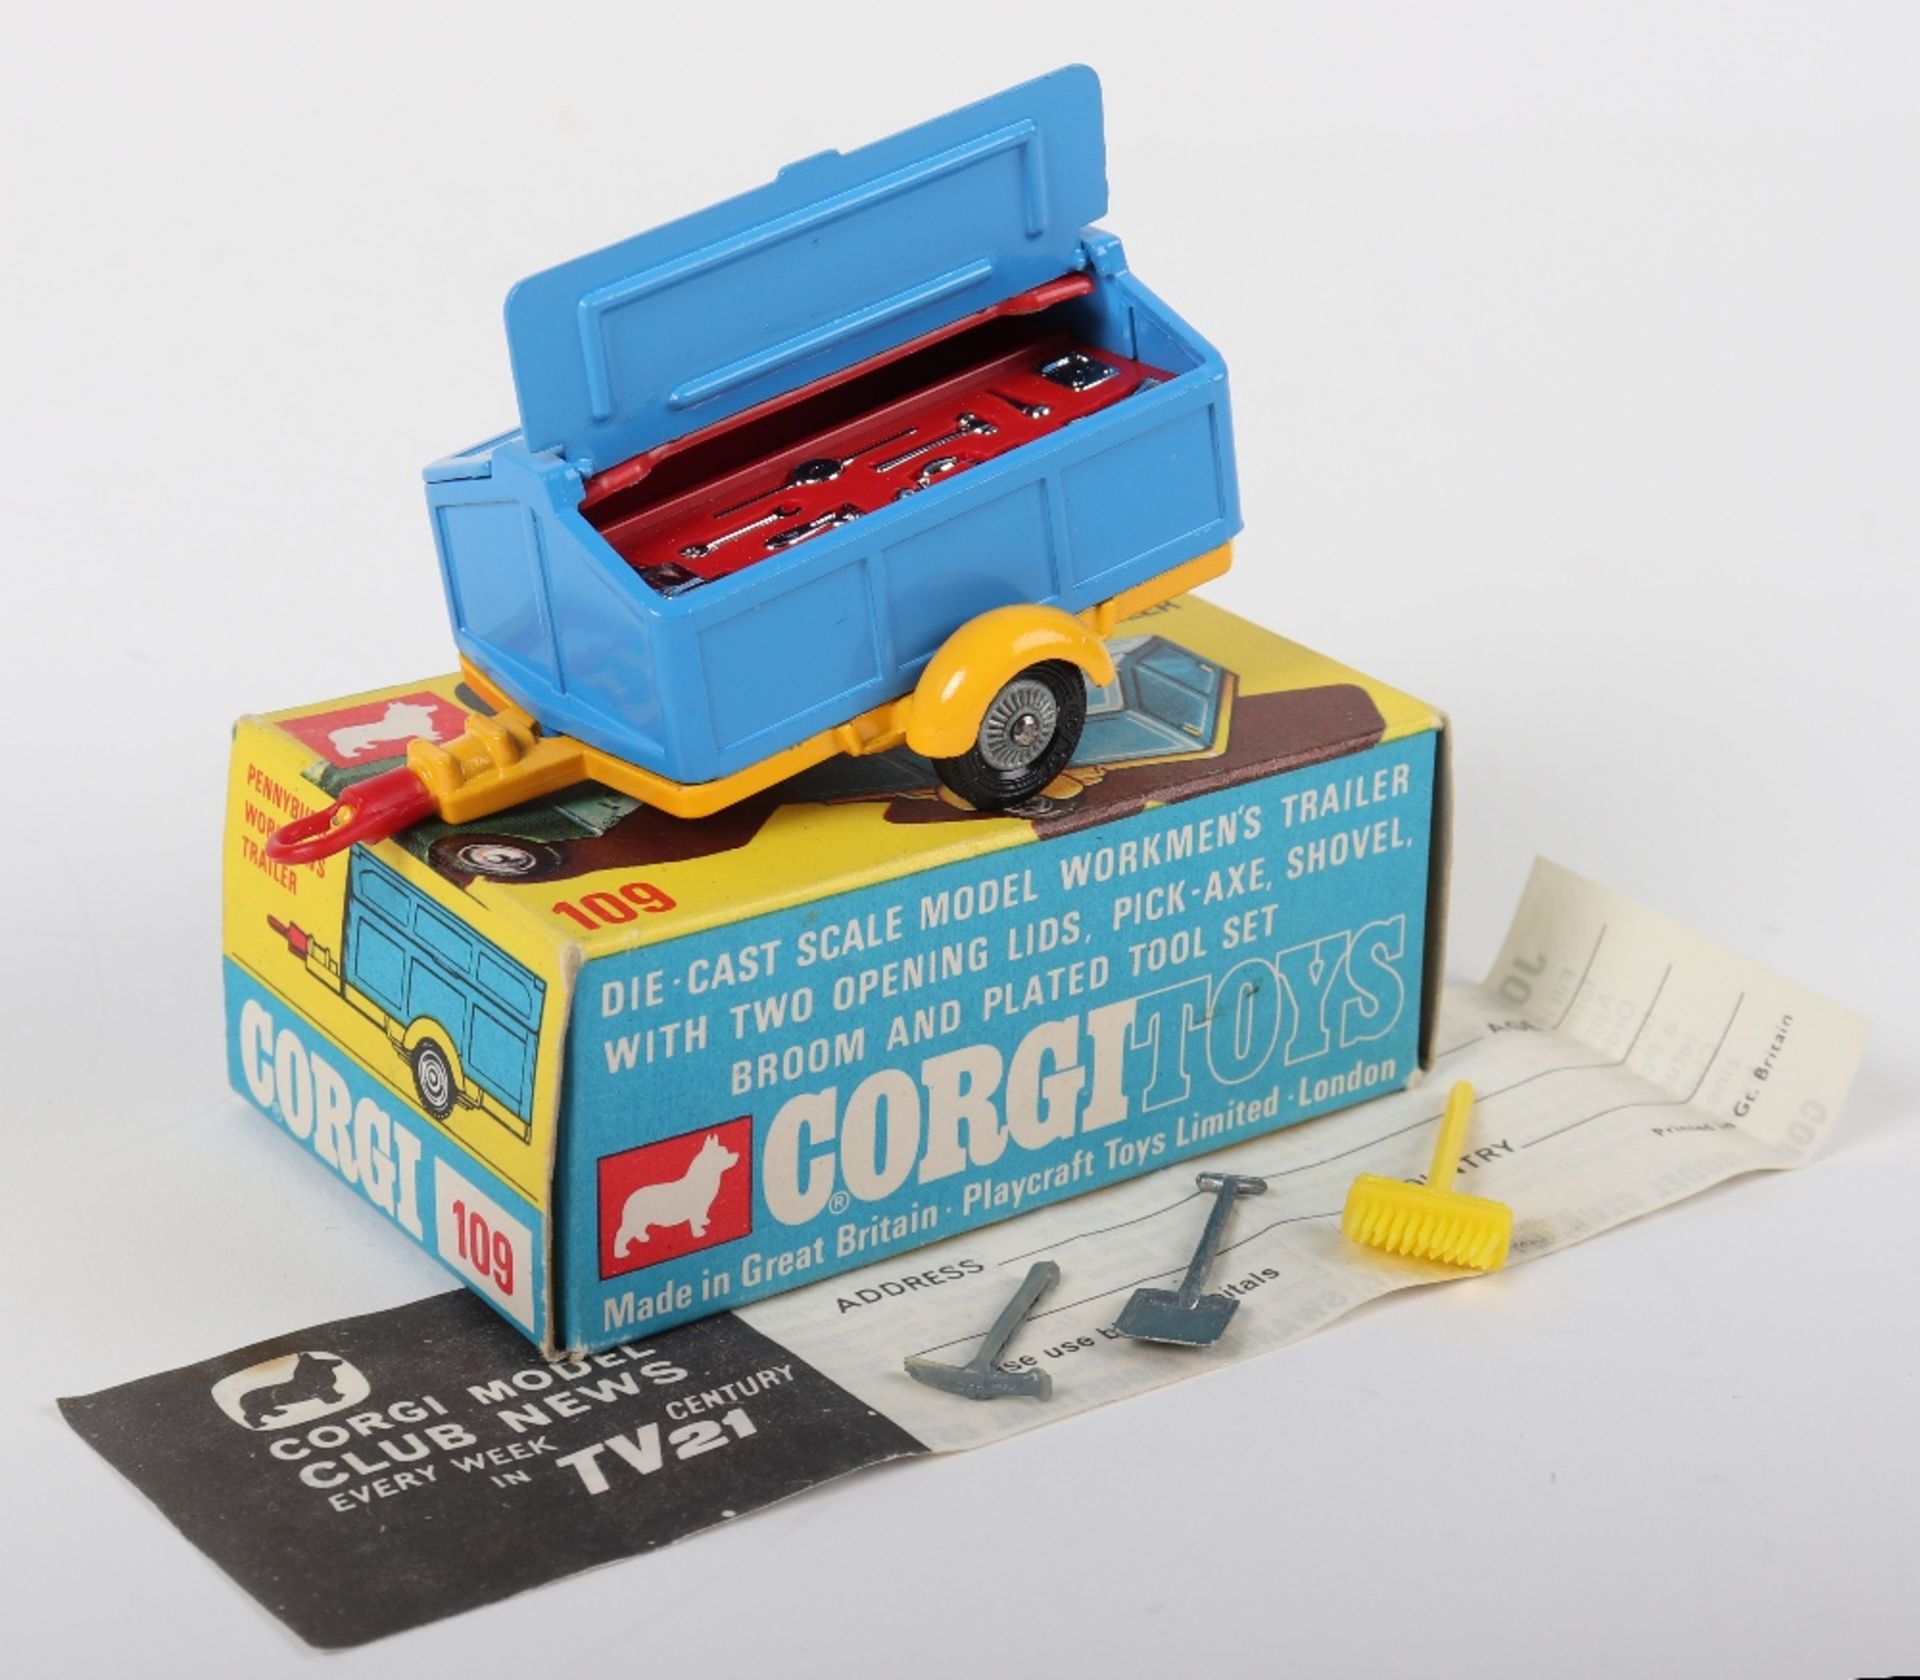 Corgi Toys 109 Pennyburn Workmen’s Trailer